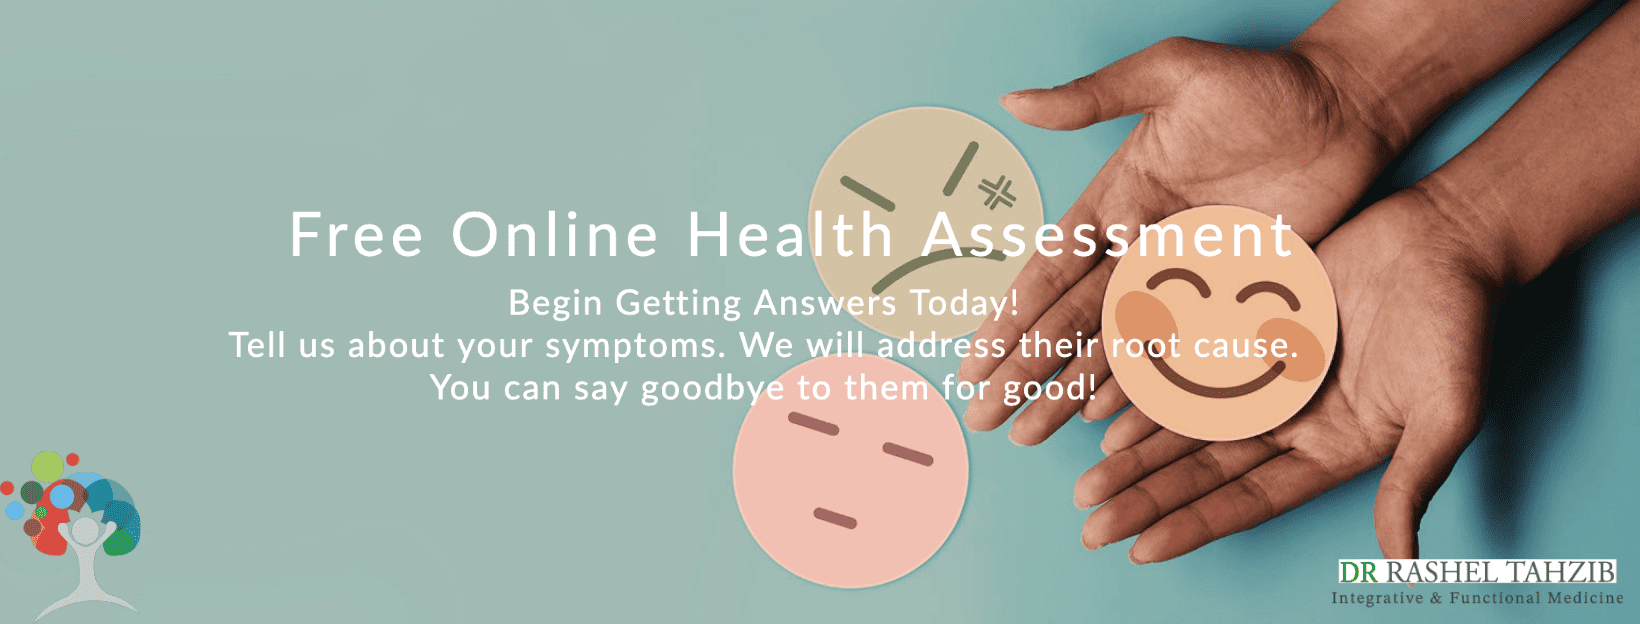 Free Online Health Assessment